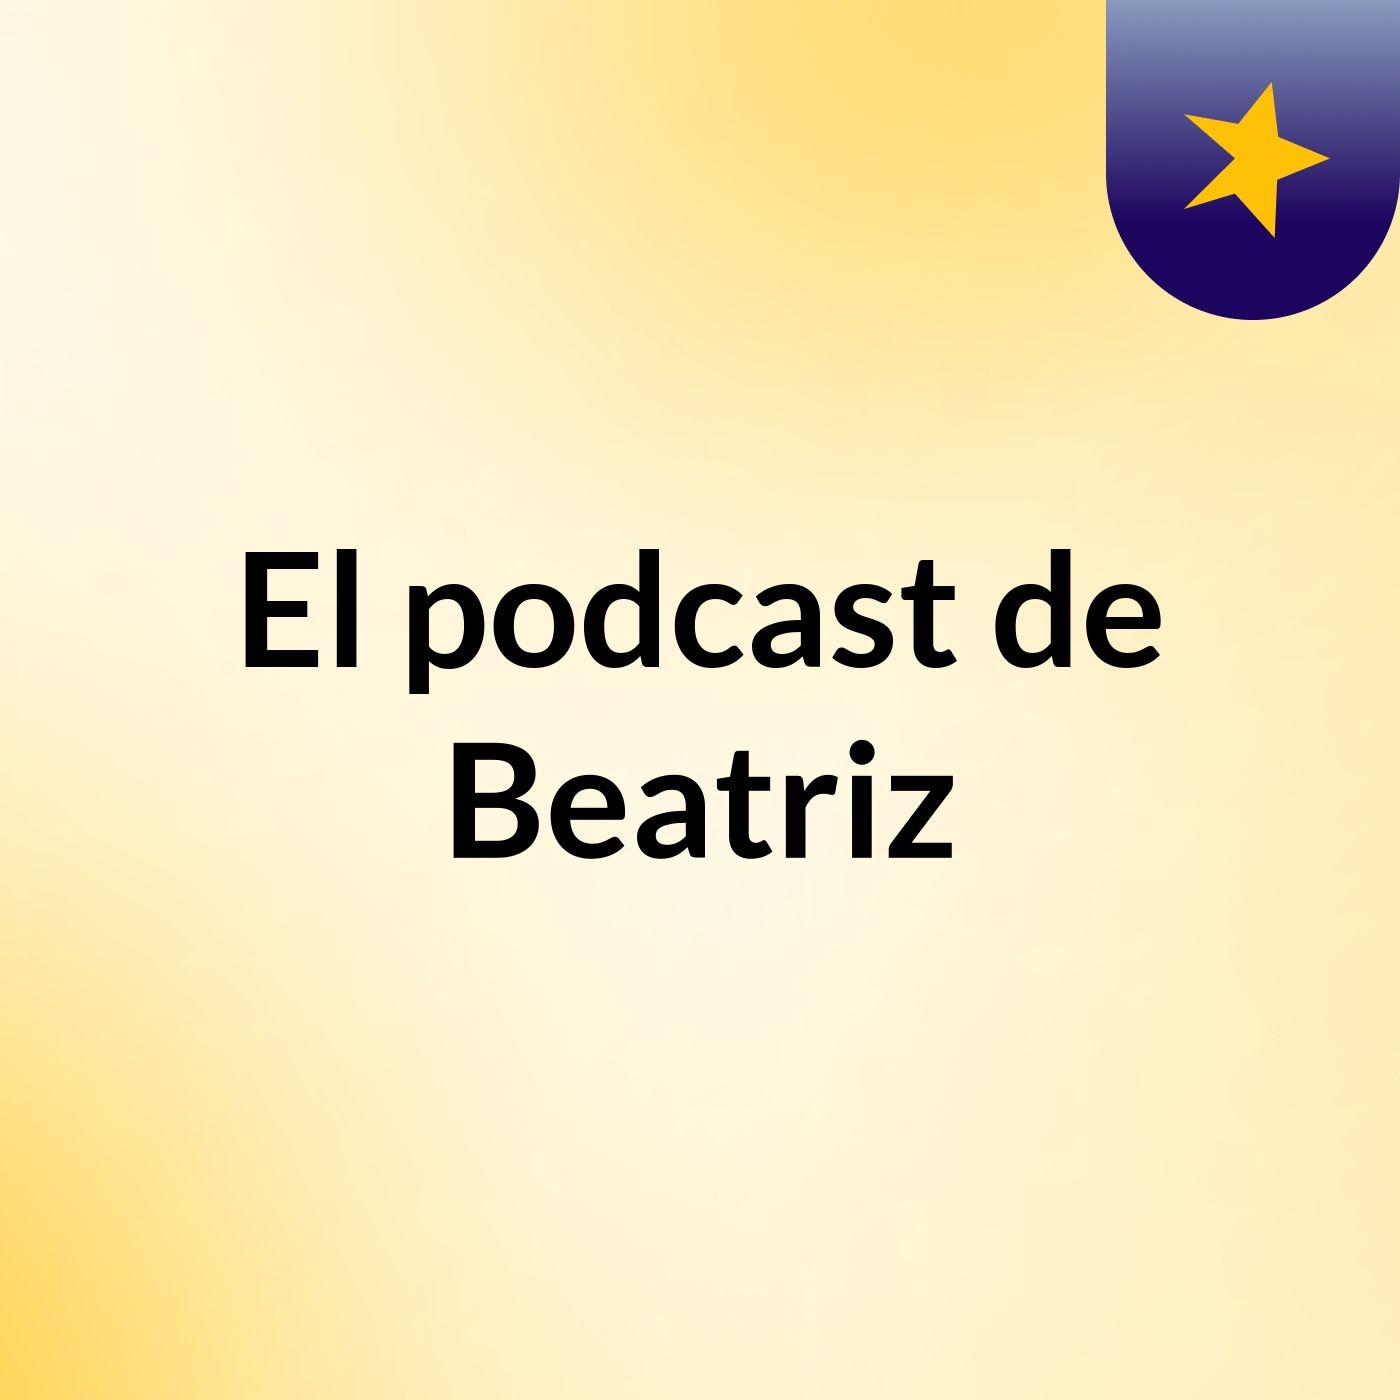 El podcast de Beatriz